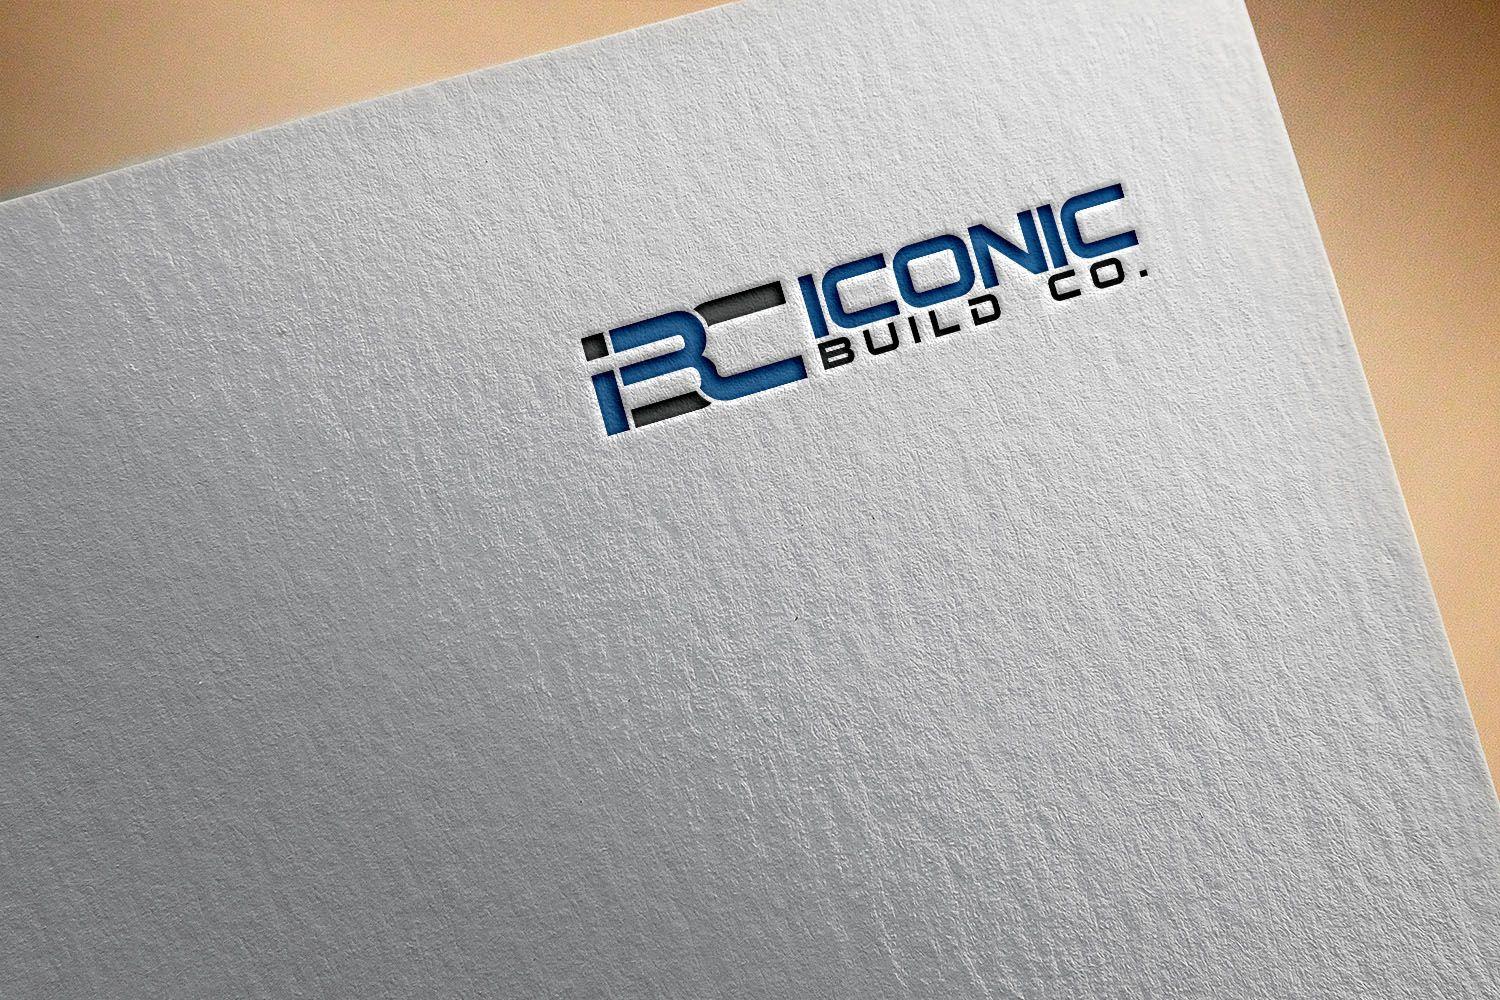 Buiilding Roman Company Logo - Serious, Modern, Building Logo Design for Iconic Build Co. by roman ...